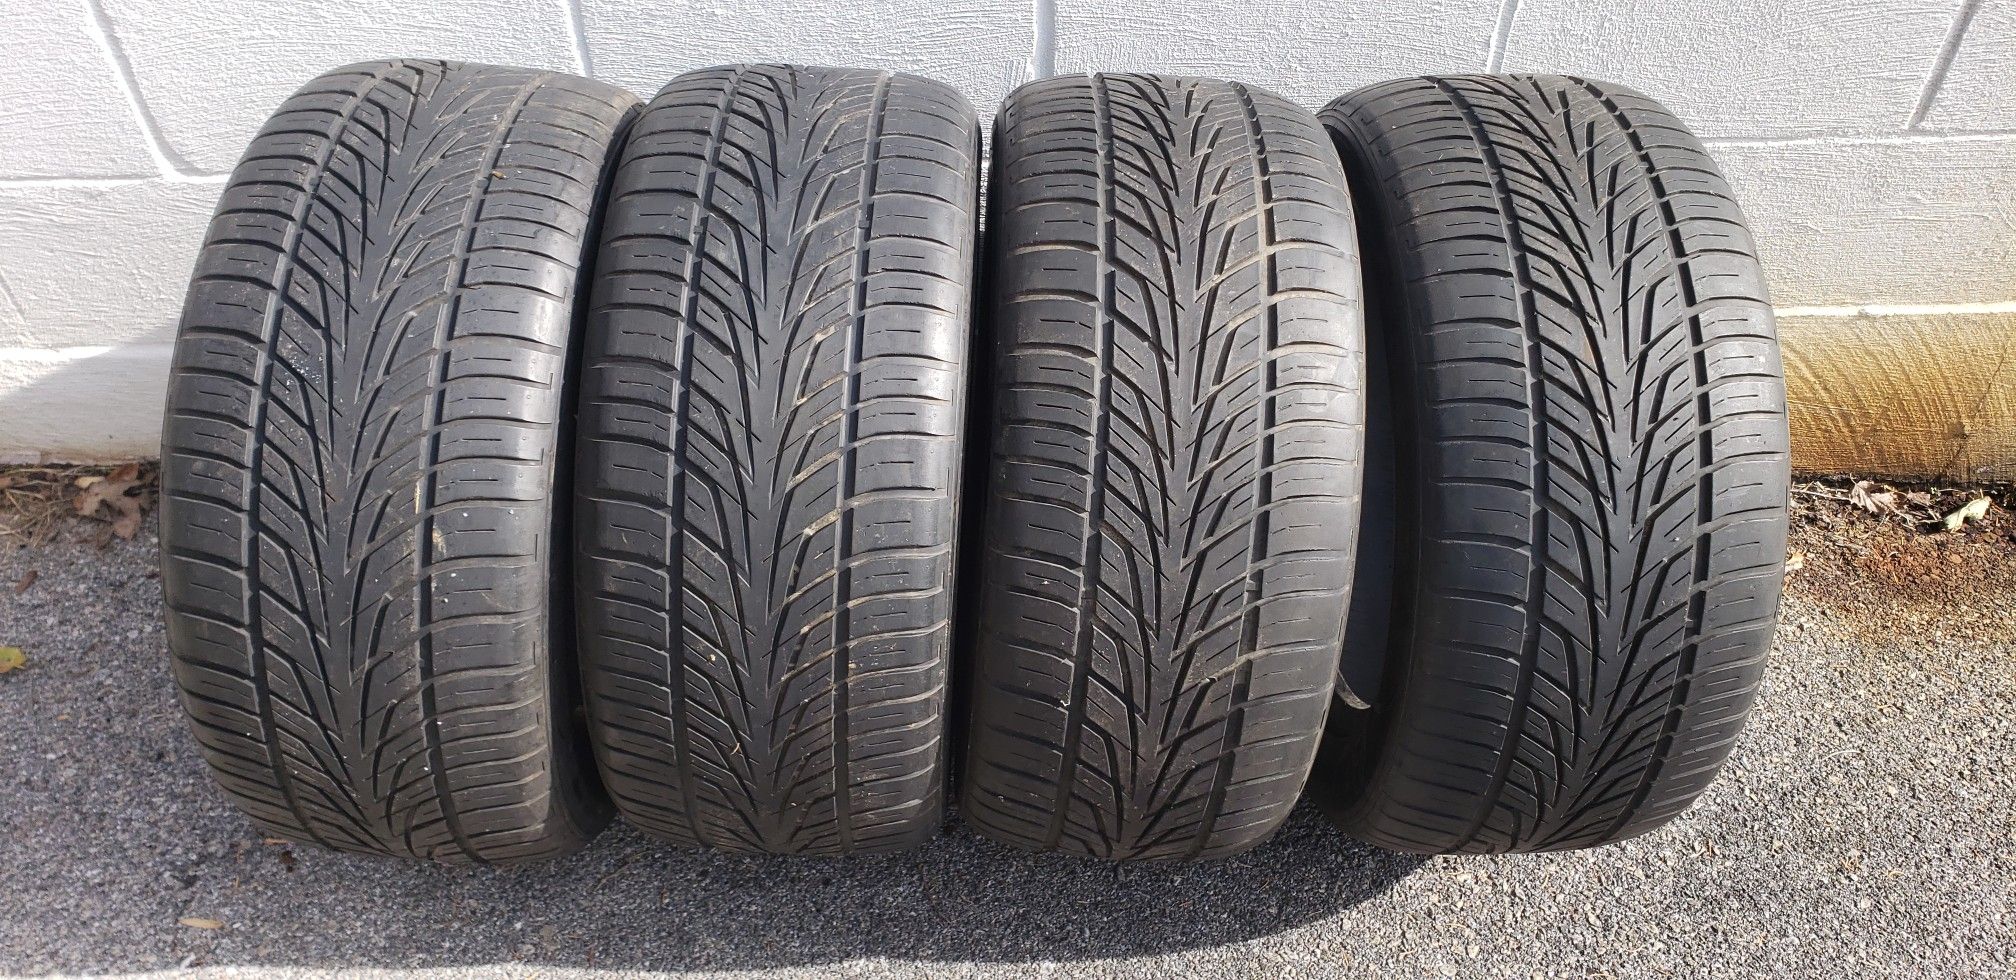 Four 245/50/16 tires